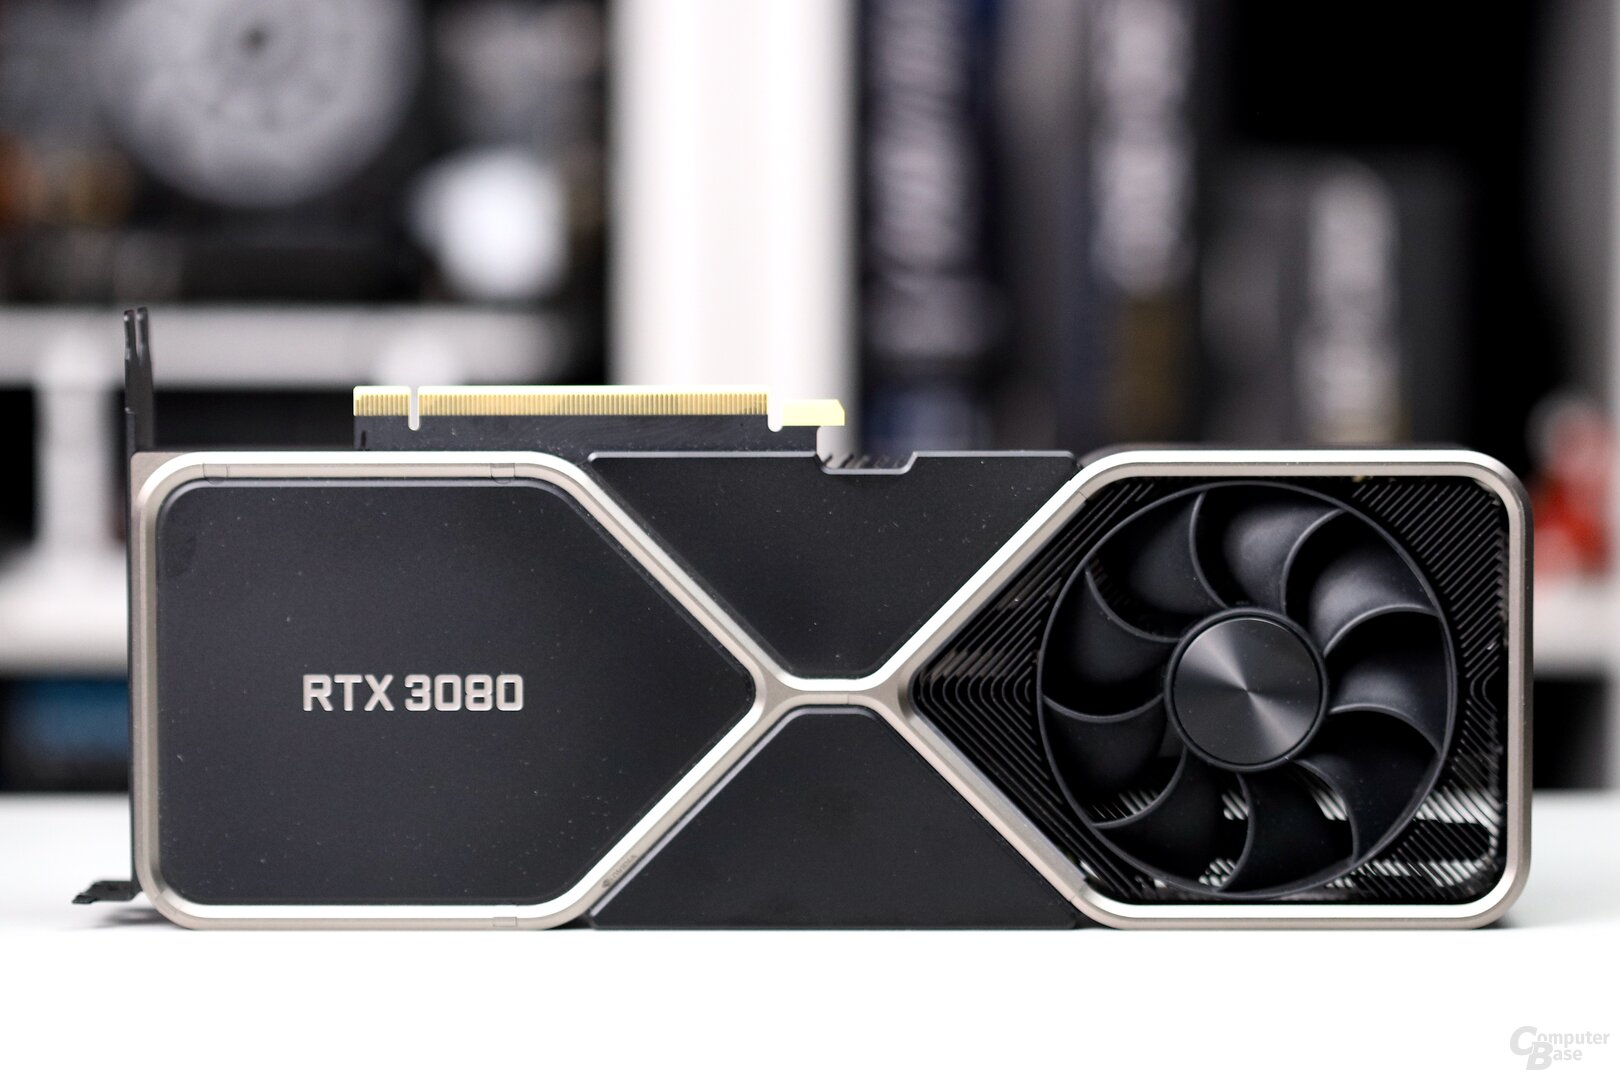 Die Nvidia GeForce RTX 3080 Founders Edition im Test